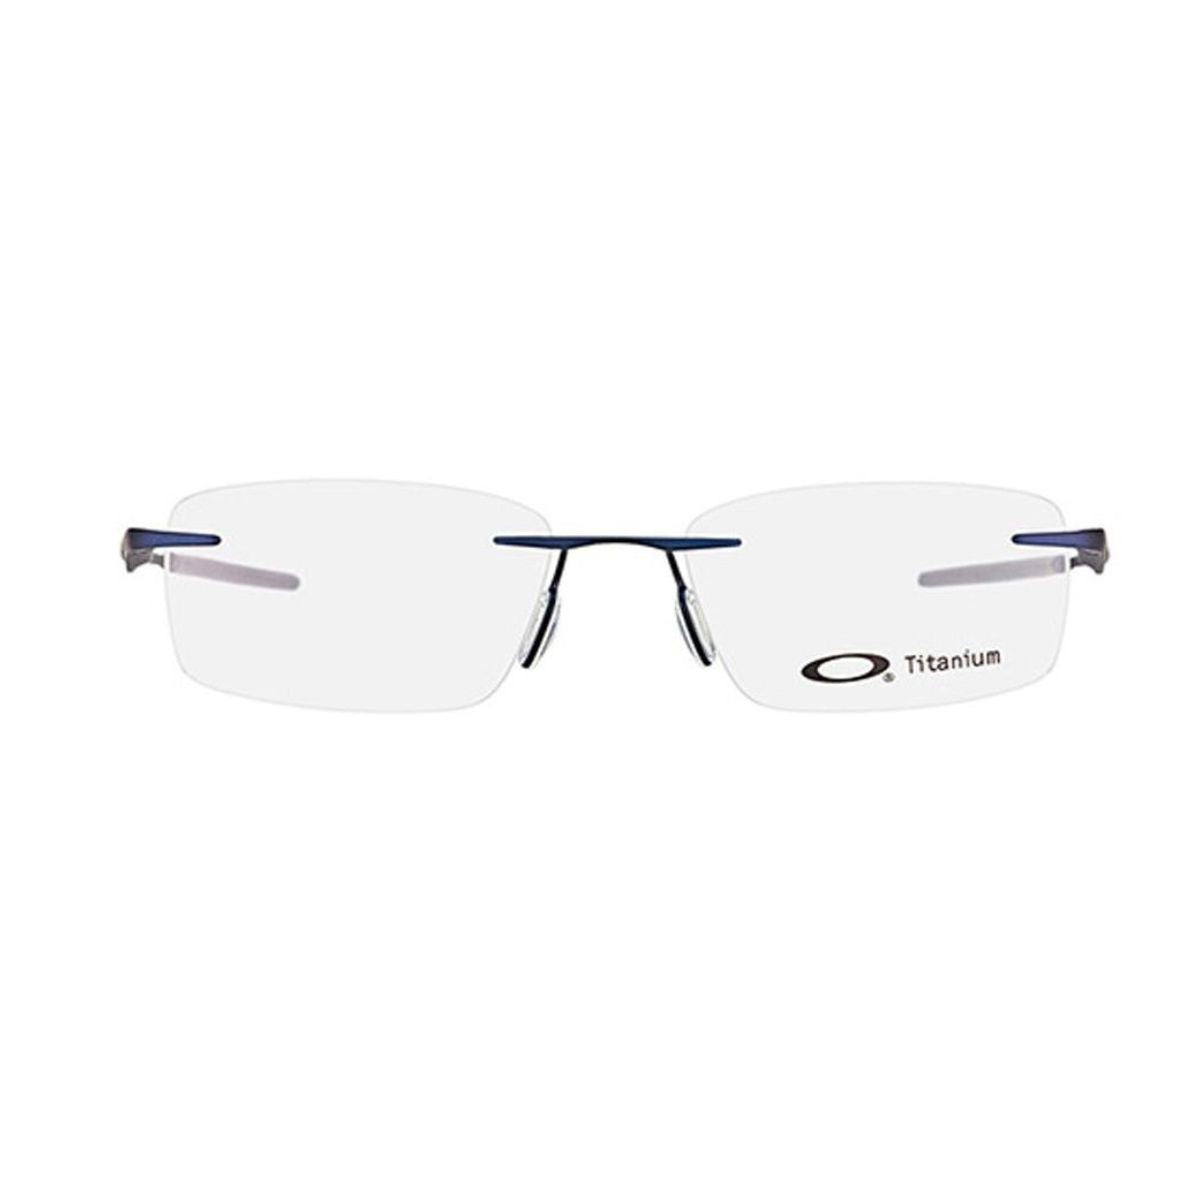 "buy Oakley 5118 0453 square metal eyeglasses frame for men's online at optorium"